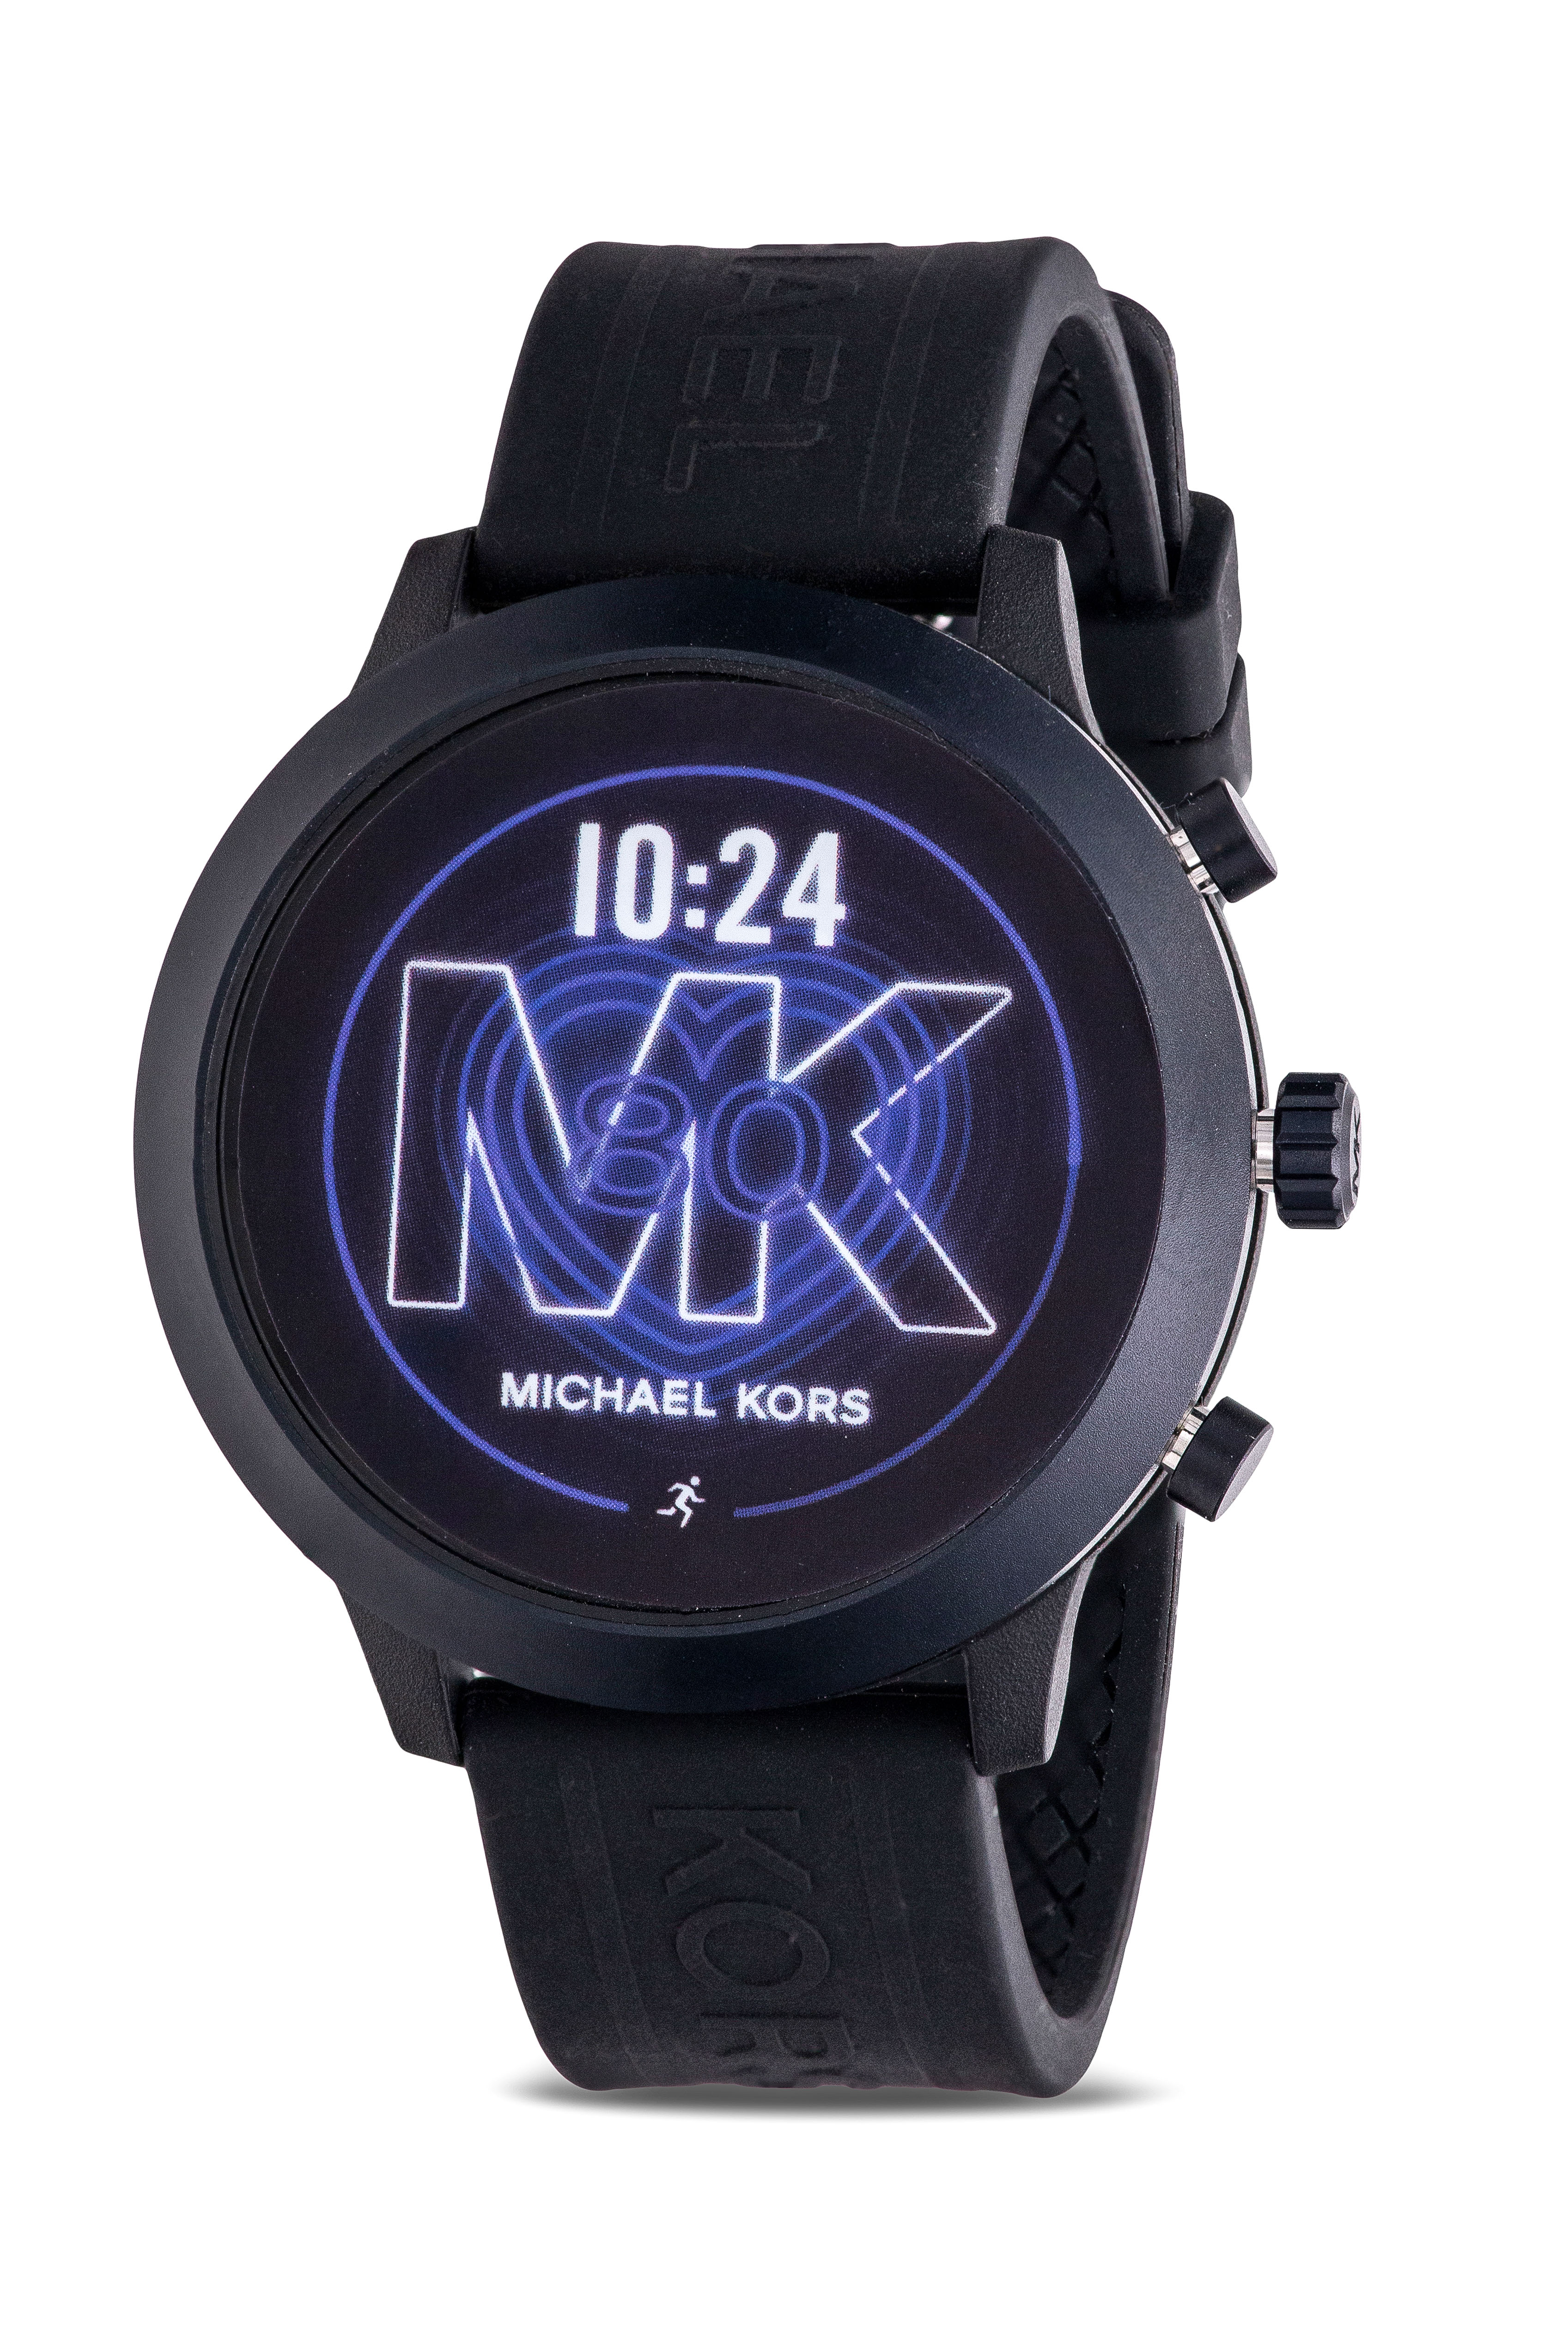 michael kors smartwatch ebay